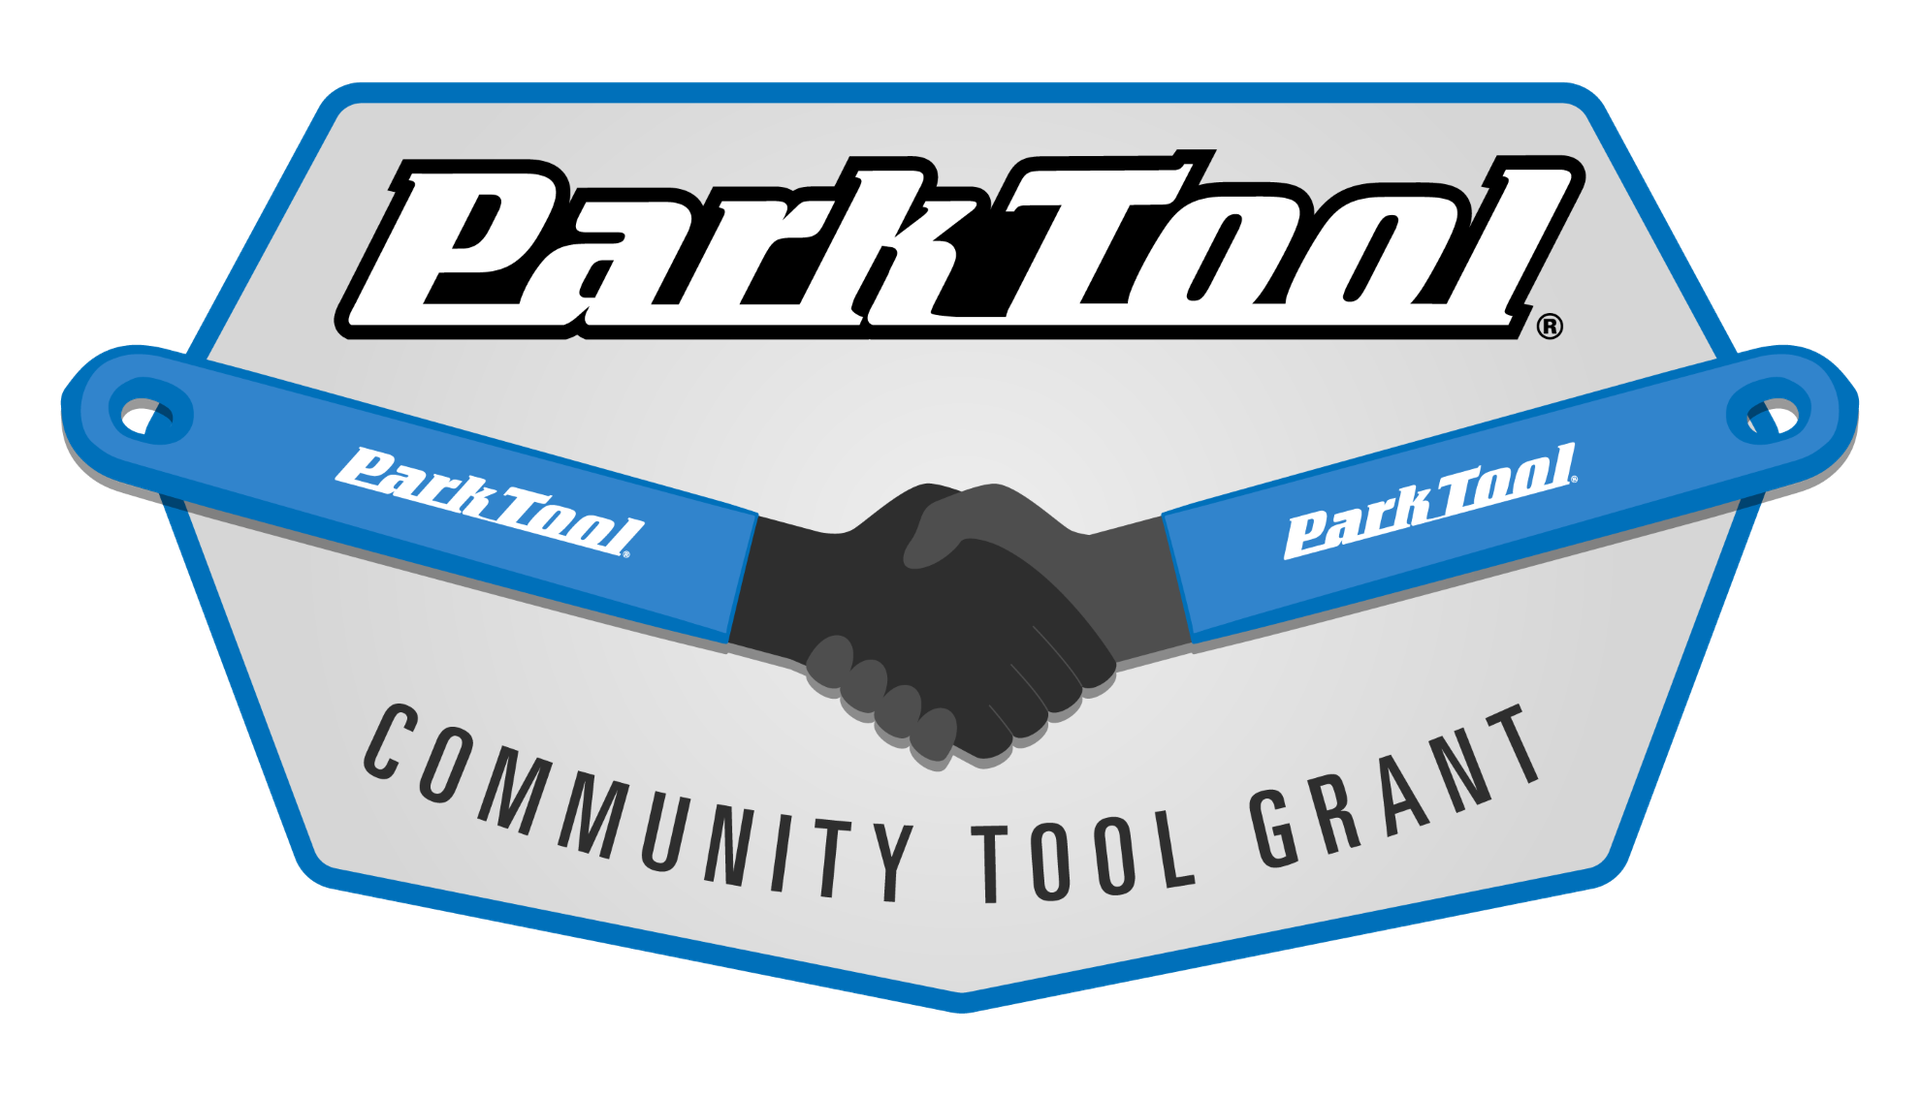 Park-Tool-Community-Tool-Grant.png